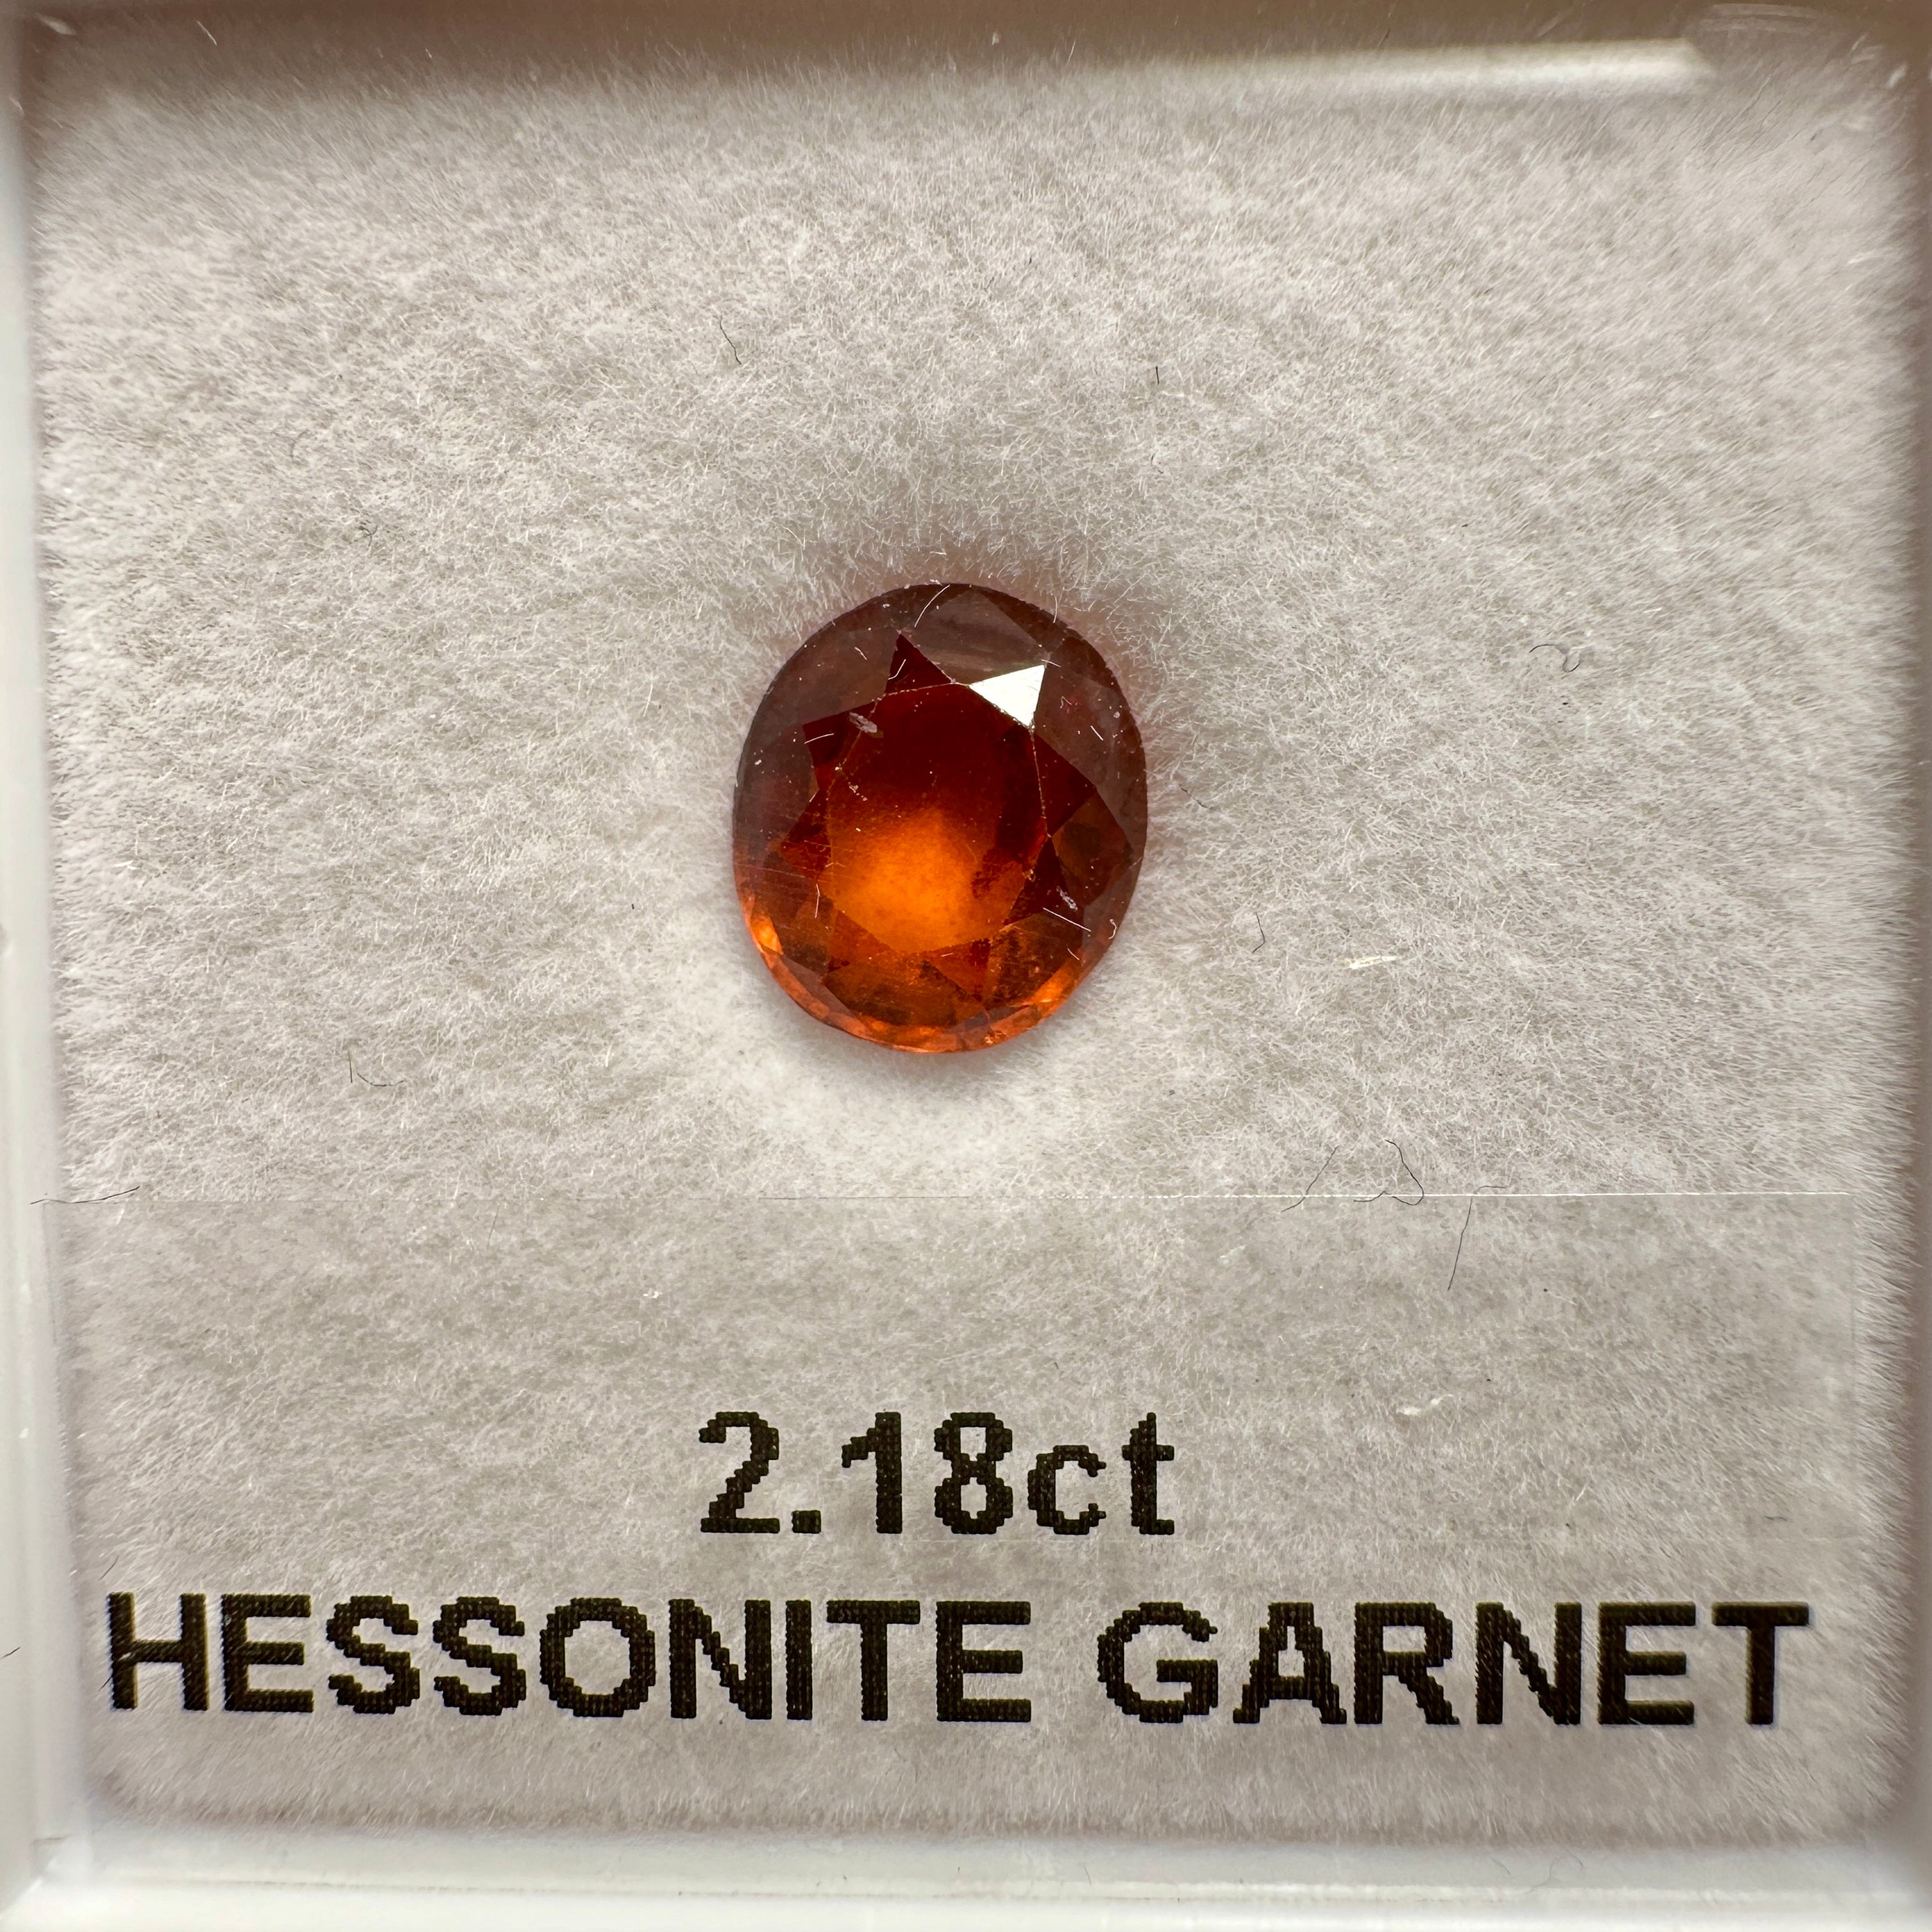 2.18ct Hessonite Garnet, Untreated Unheated, native cut